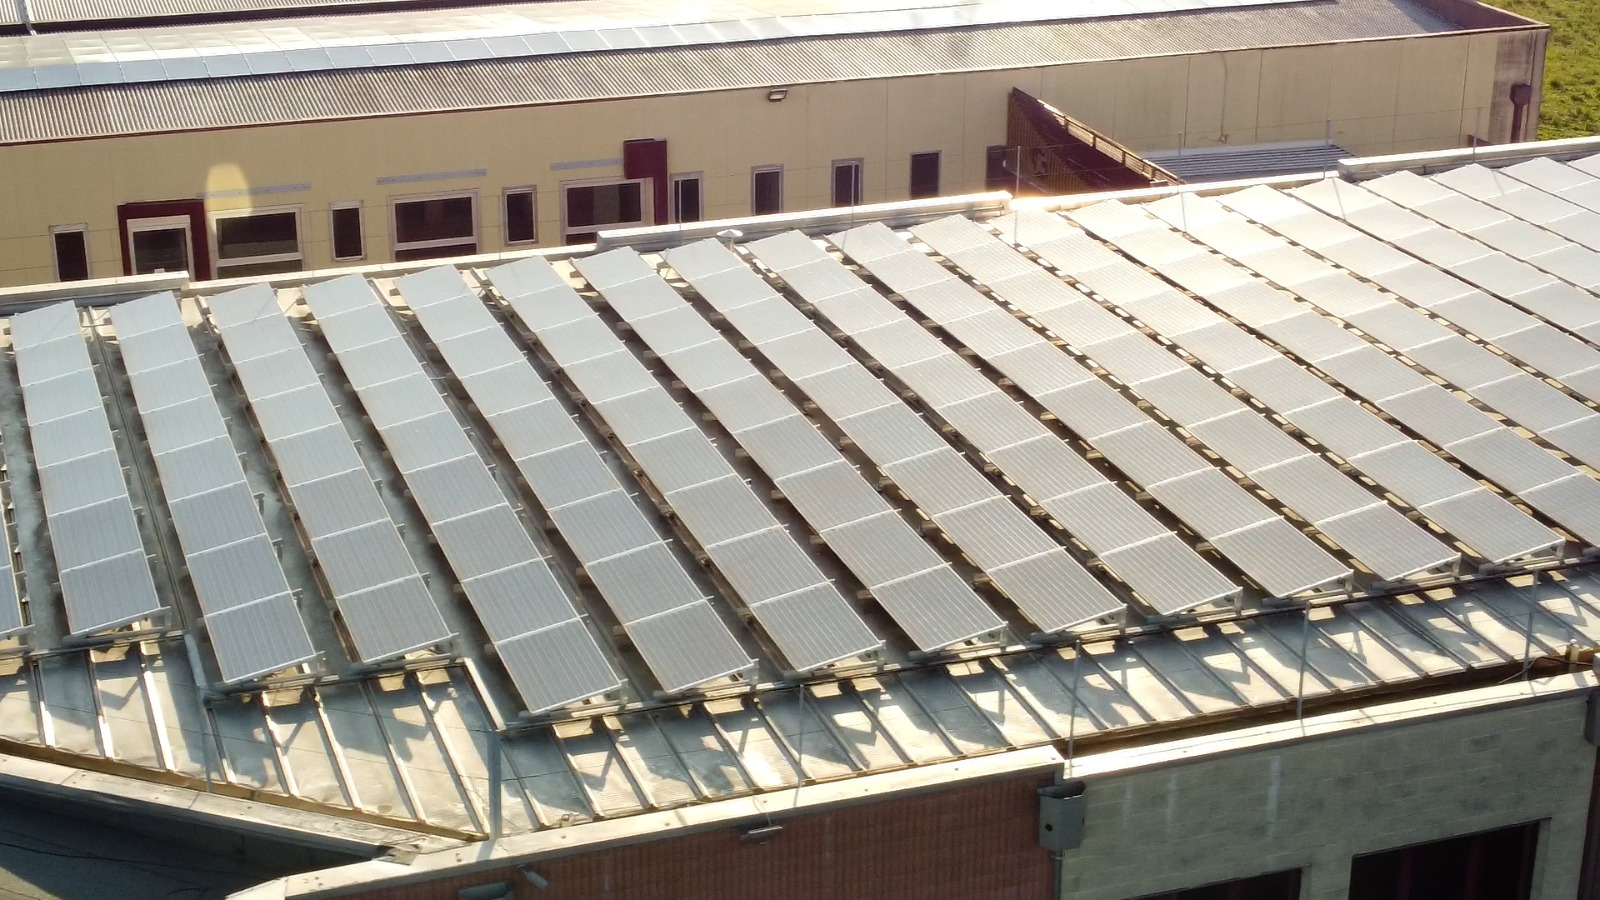 Pannelli fotovoltaici in uno stabilimento industriale (foto: Nexting)